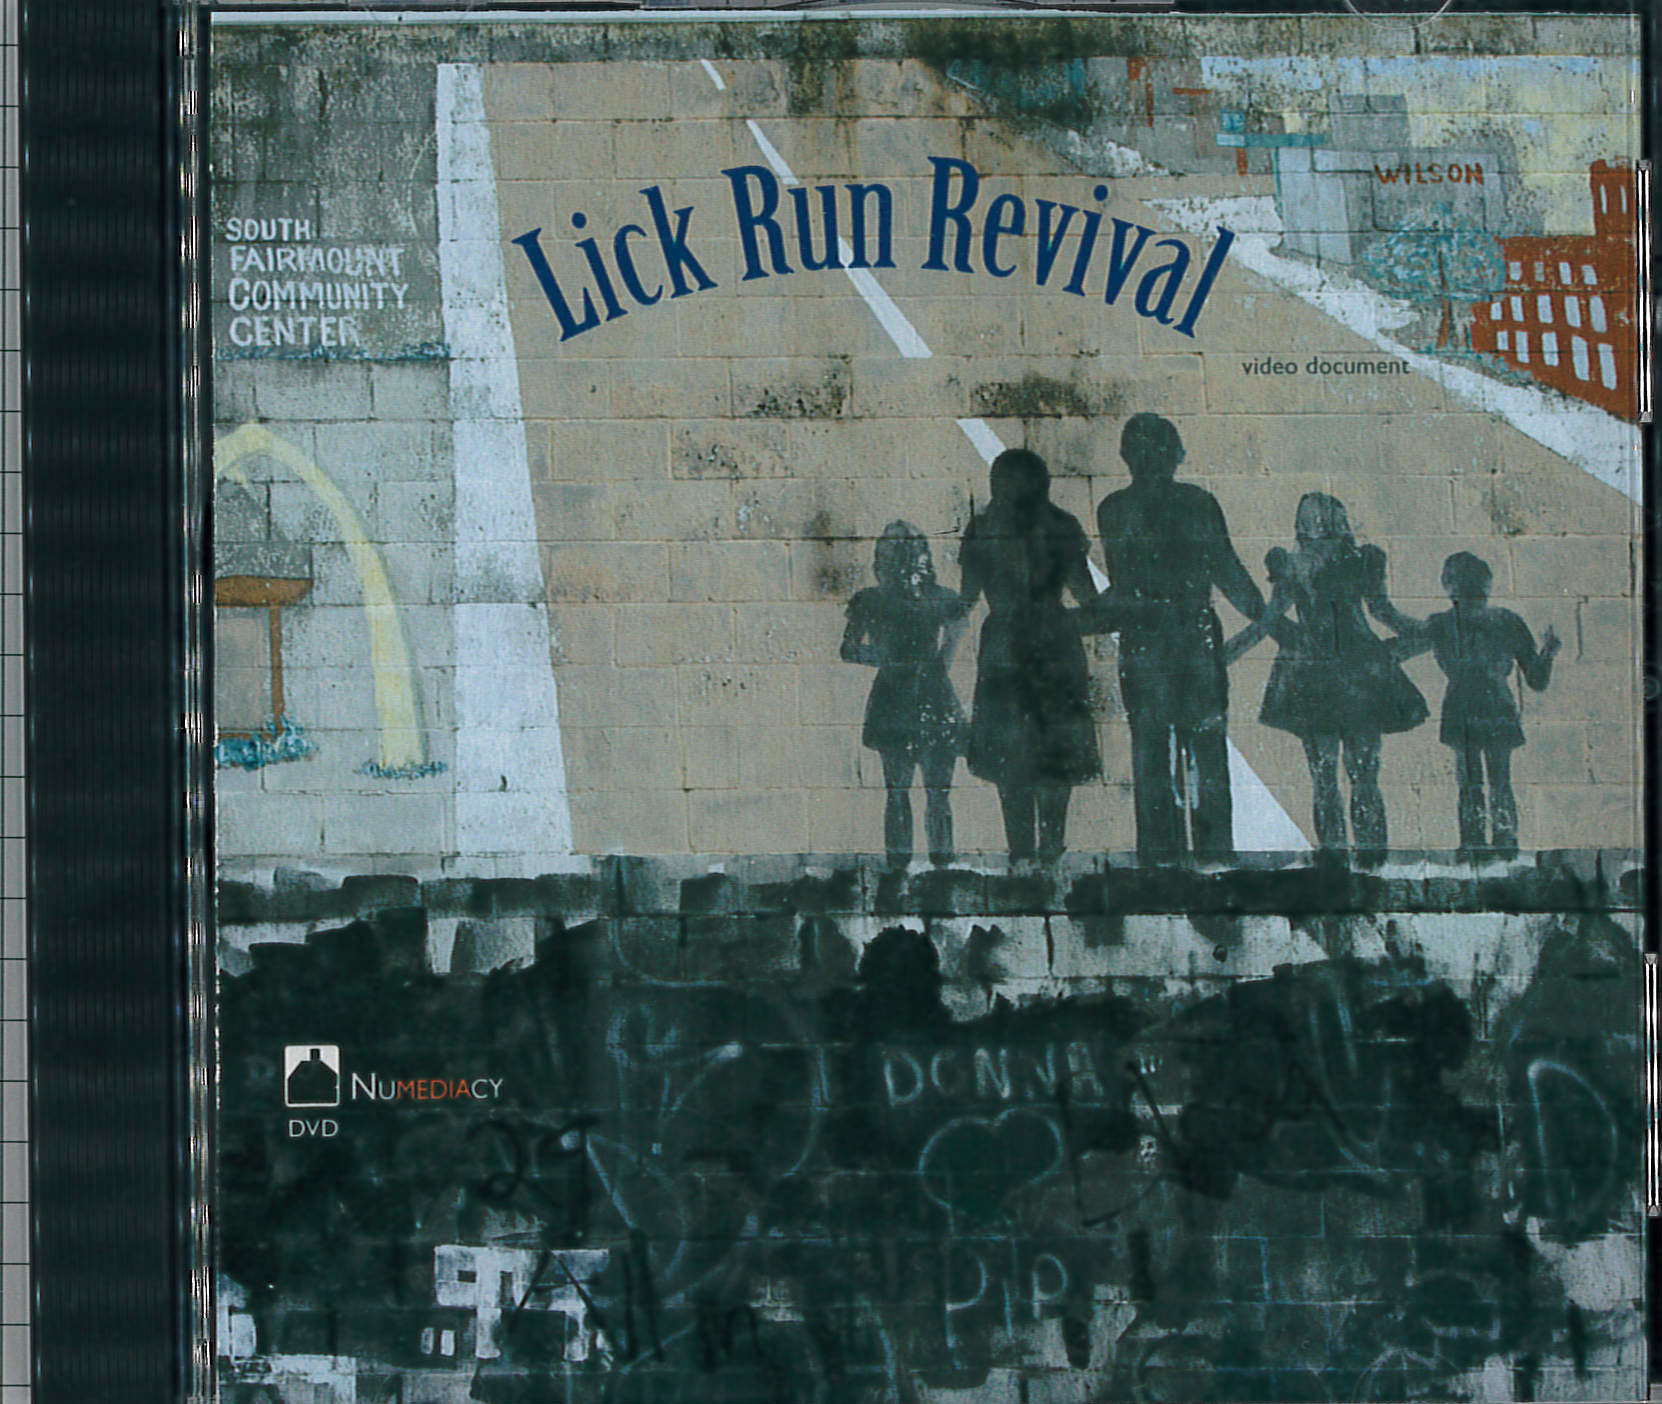 Cover of Lick Run Revival Video